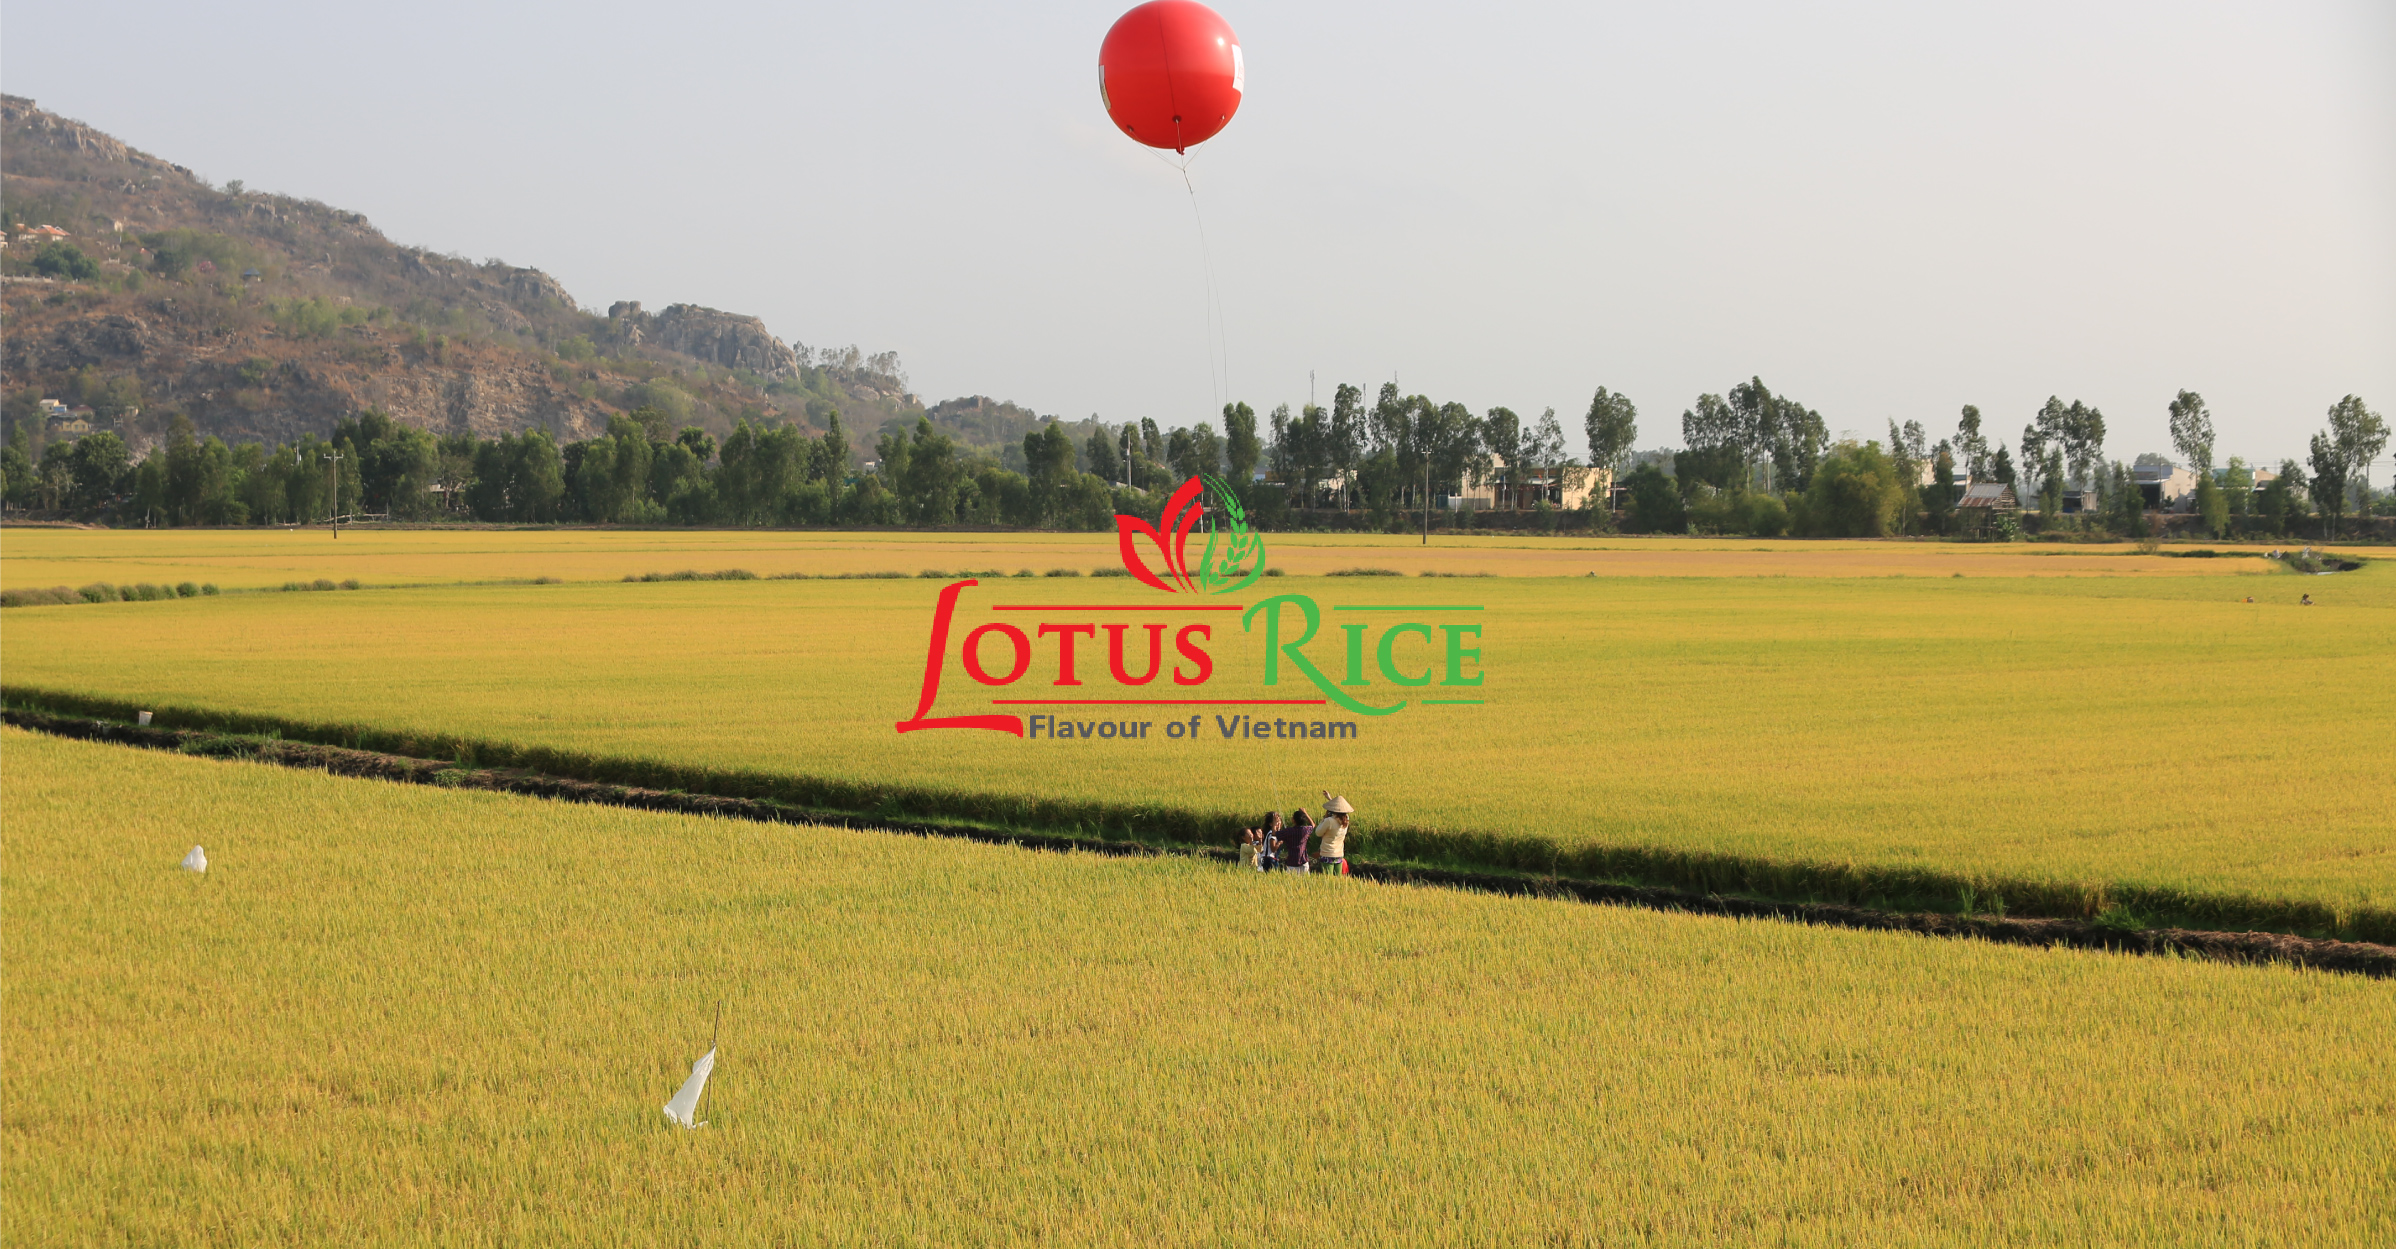 The Journey of Rice - Lotus Rice Vietnam